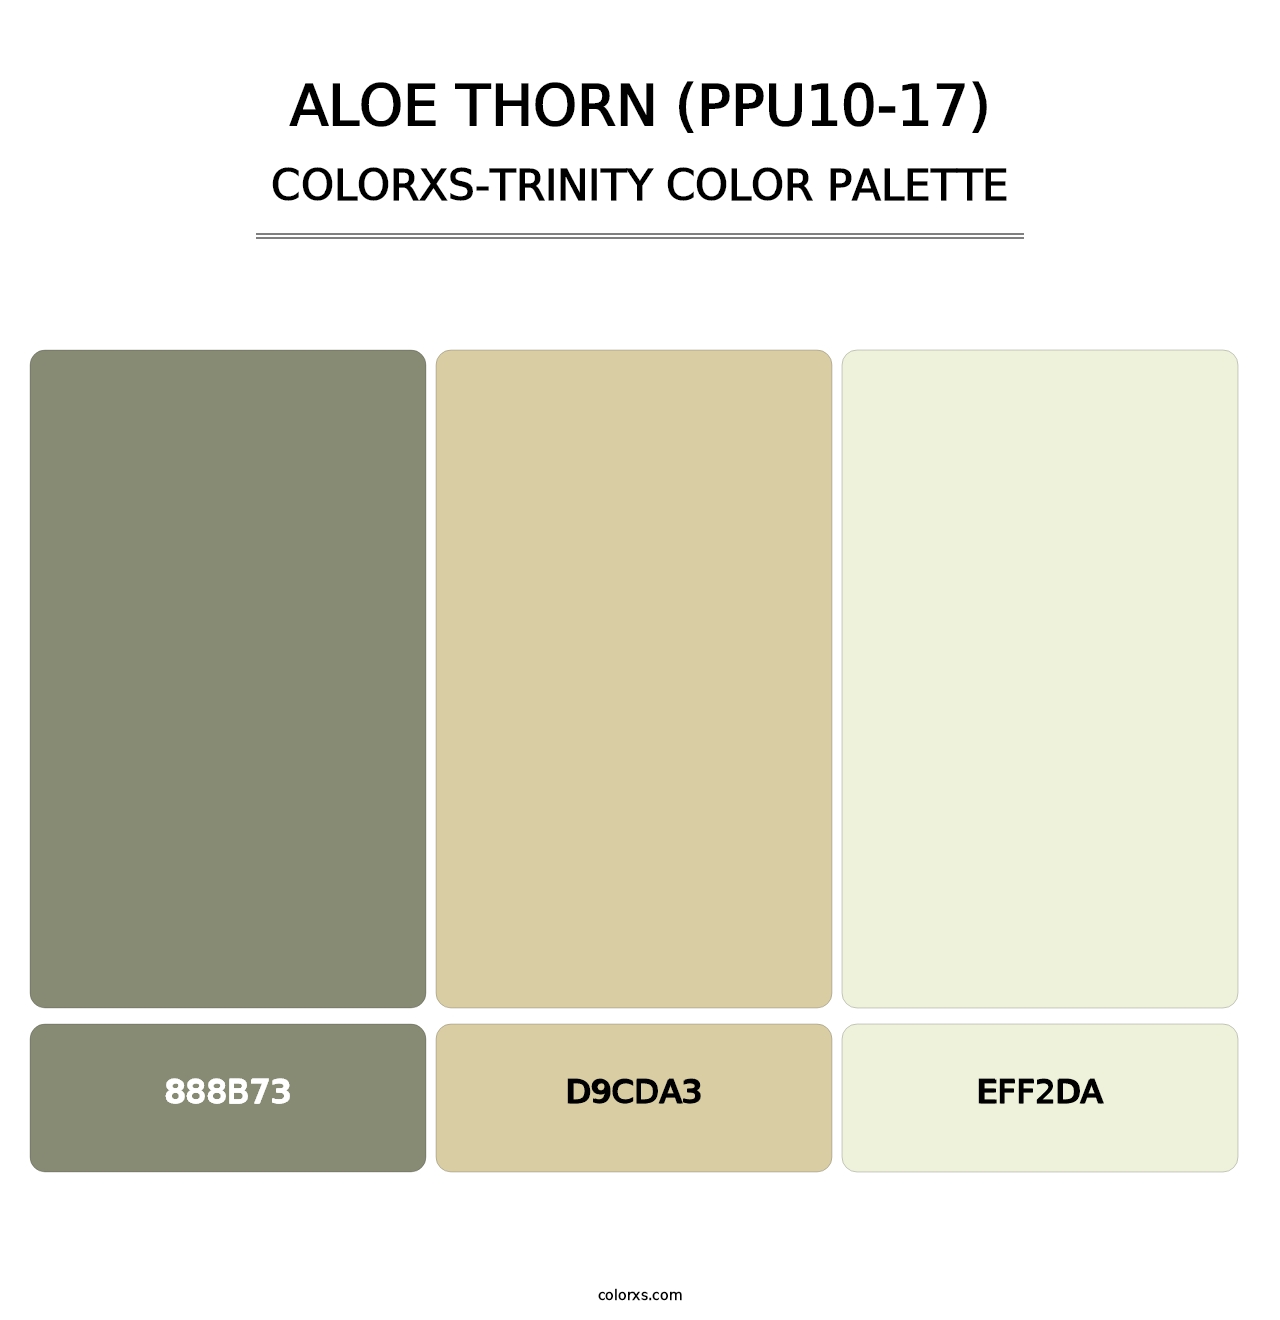 Aloe Thorn (PPU10-17) - Colorxs Trinity Palette